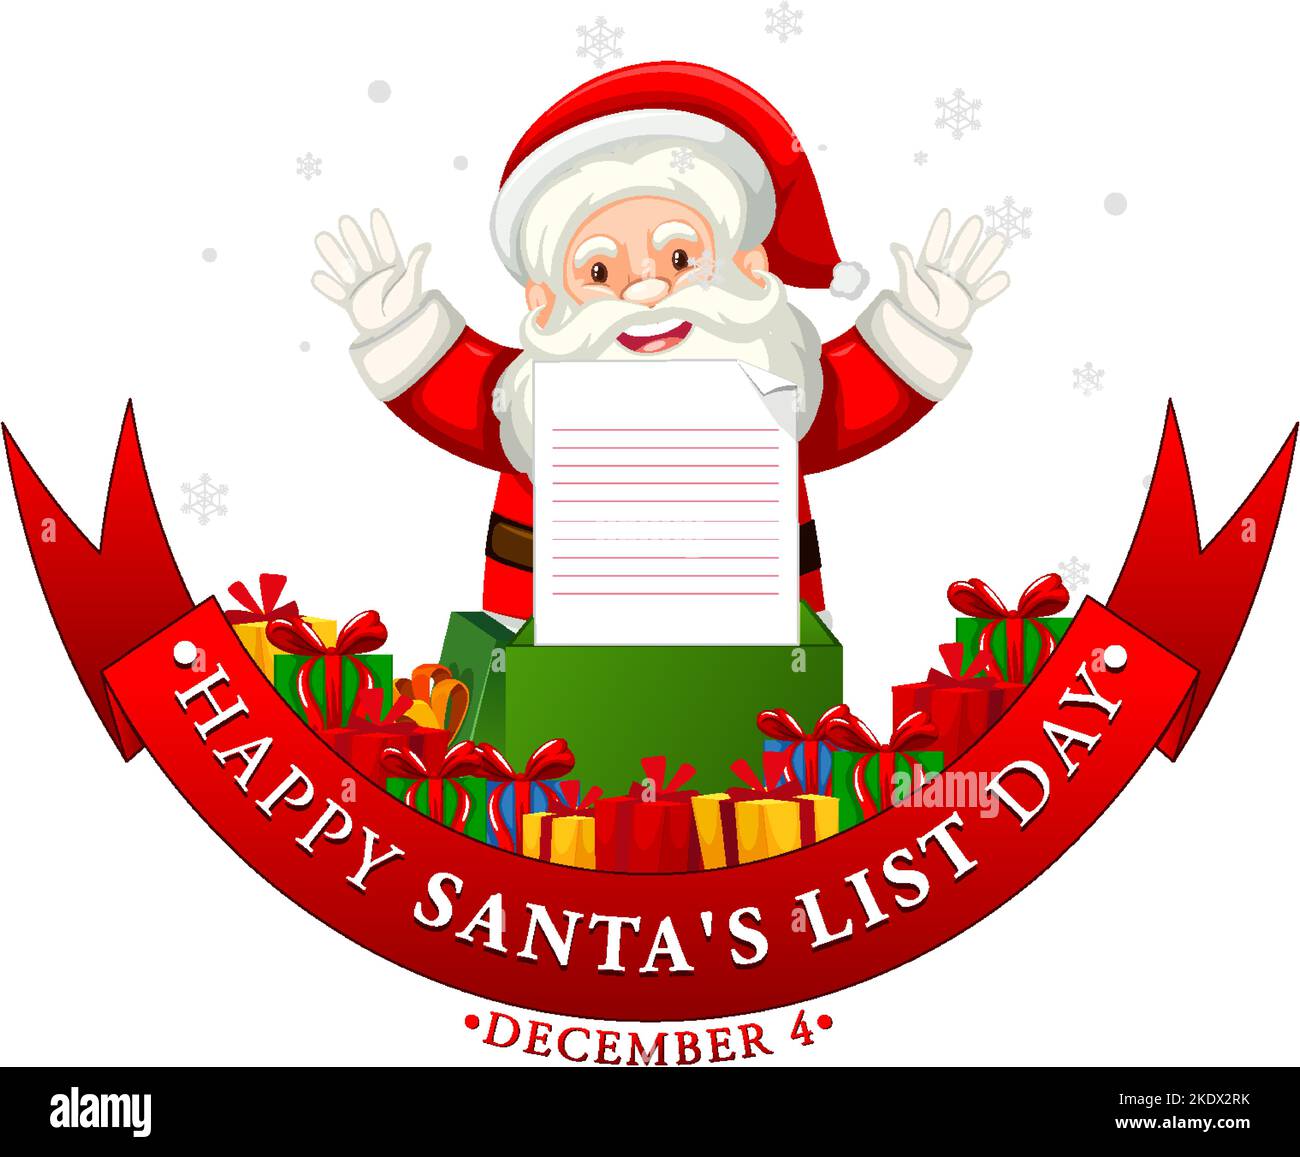 Happy Santa's List Day banner design illustration Stock Vector Image